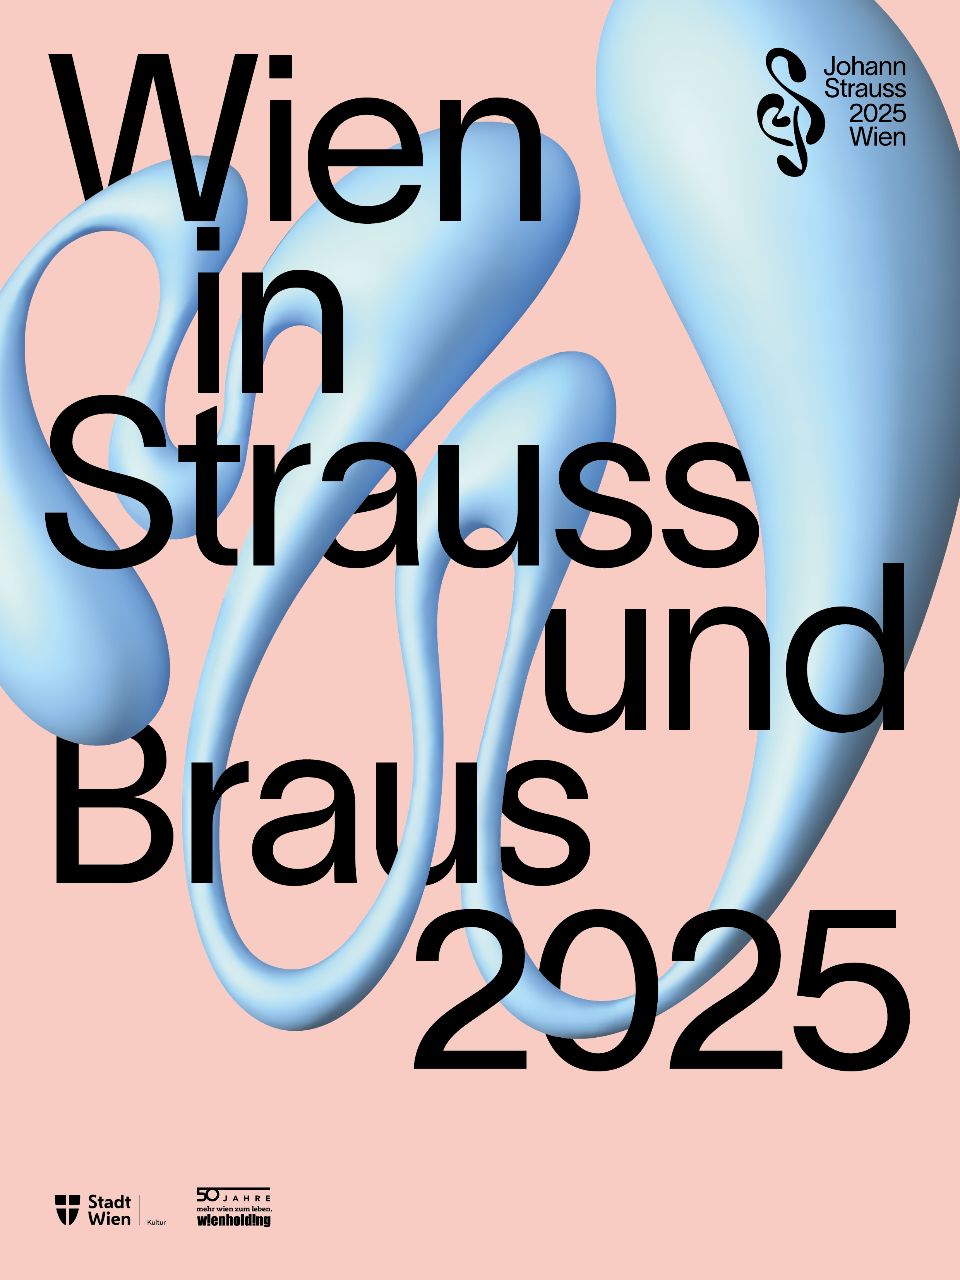 Key-visual-Johann-Strauss-Festjahr-2025-Johann.Strauss-Festjahr2025-GmbH.jpg